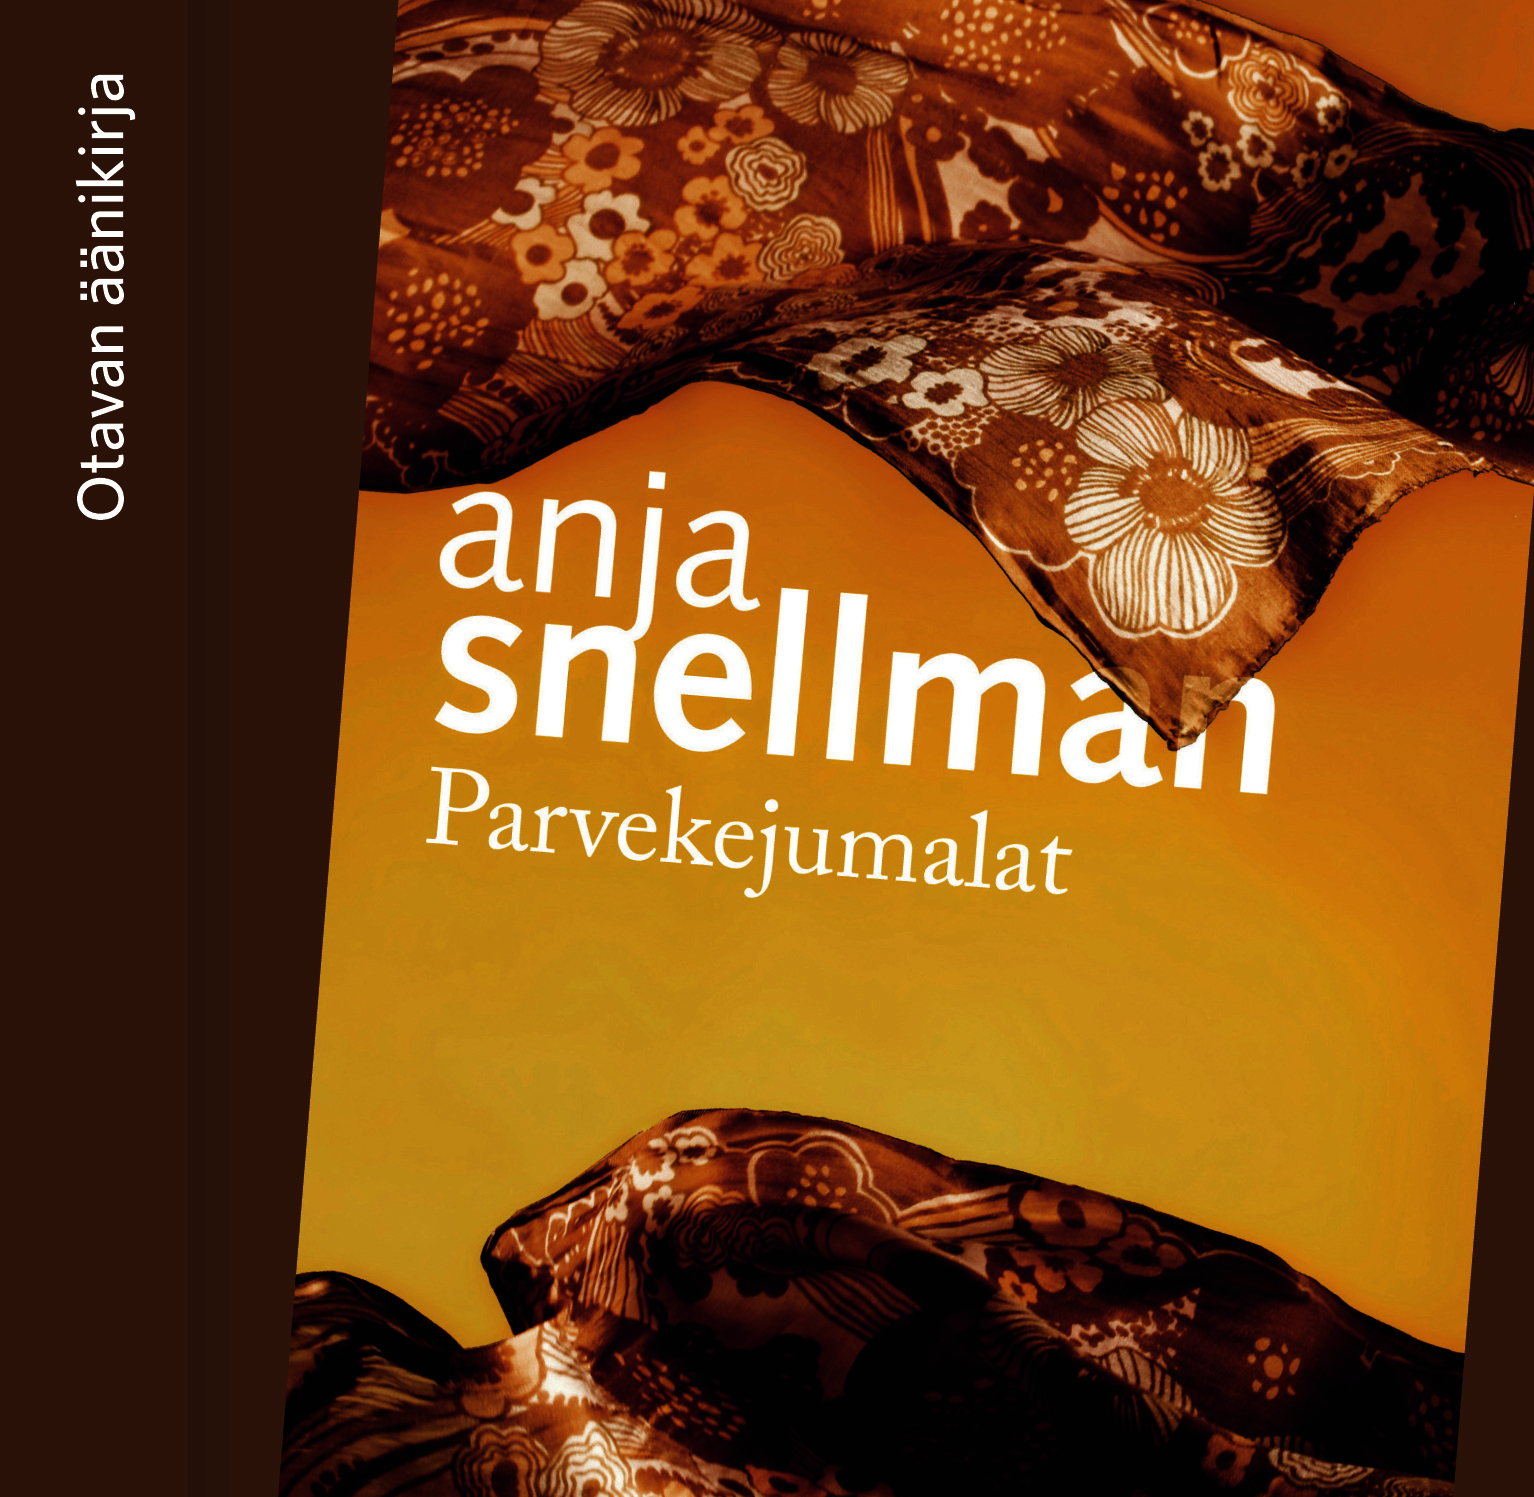 Snellman, Anja - Parvekejumalat, audiobook